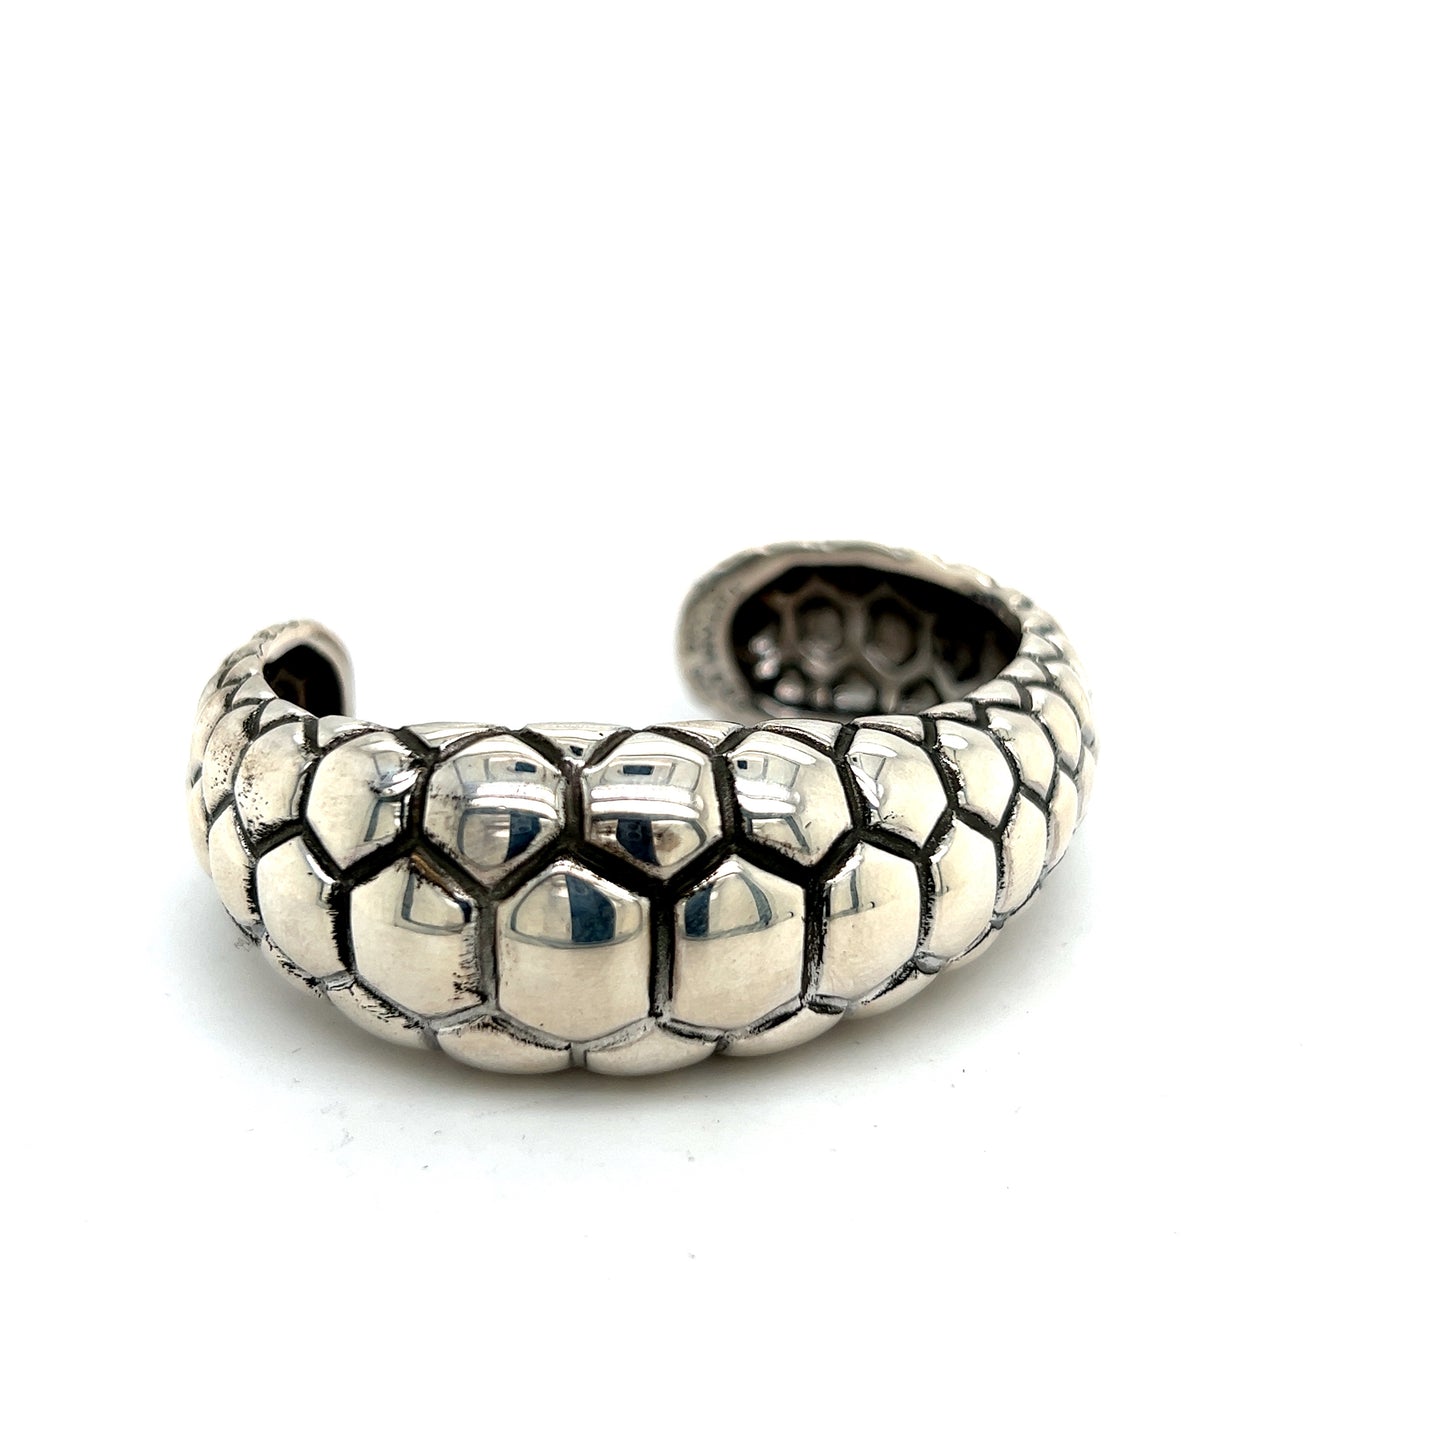 Tiffany & Co Estate Bangle Bracelet 7.5" Medium Beehive Design Sterling Silver TIF361